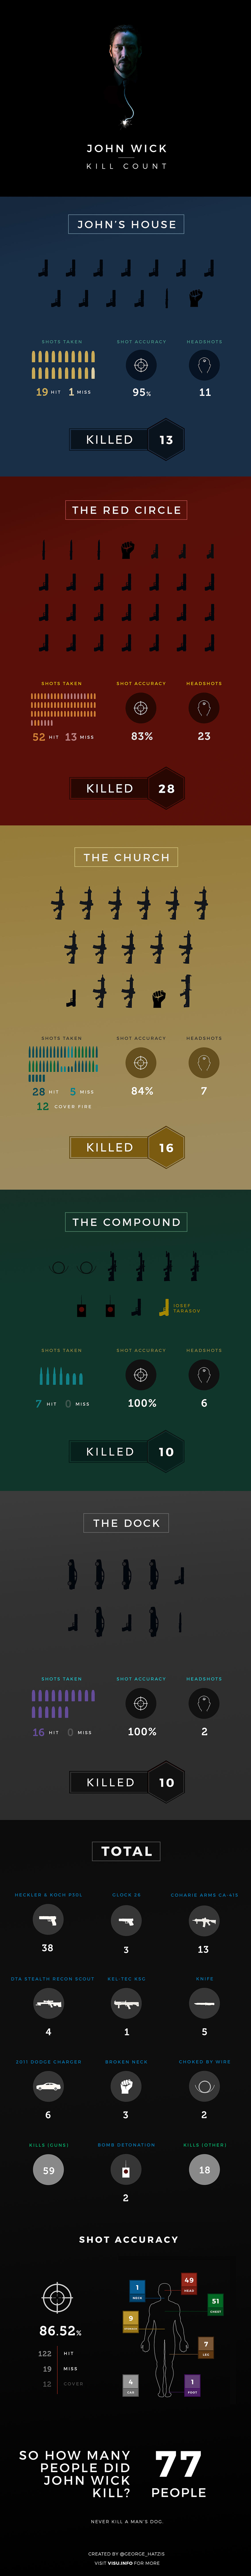 John Wick Kill Count Movie infographic